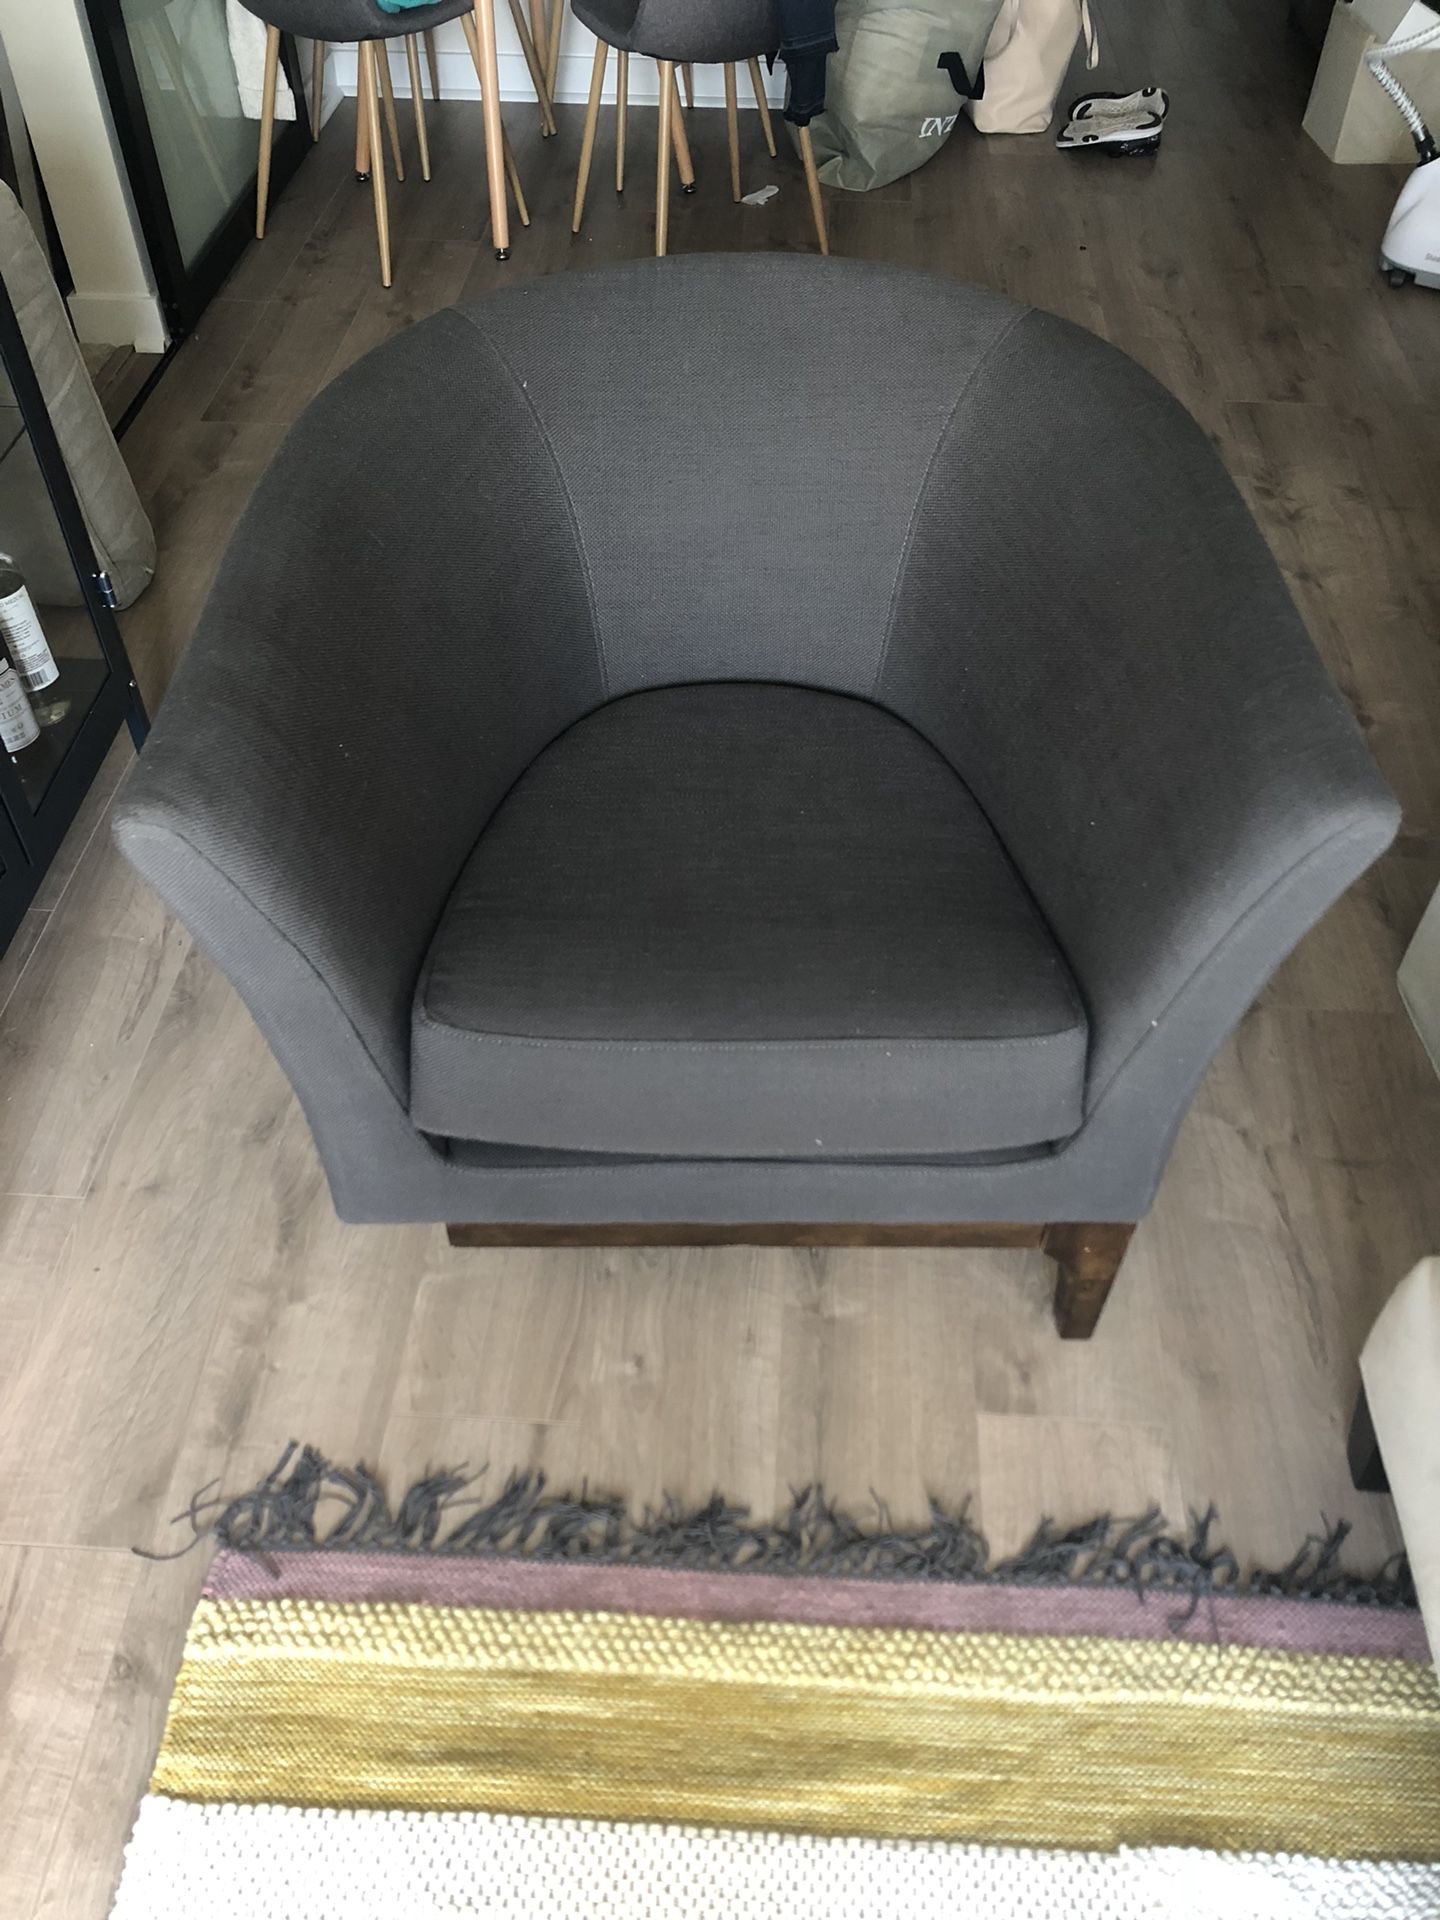 Barely used gray Wayfair chair